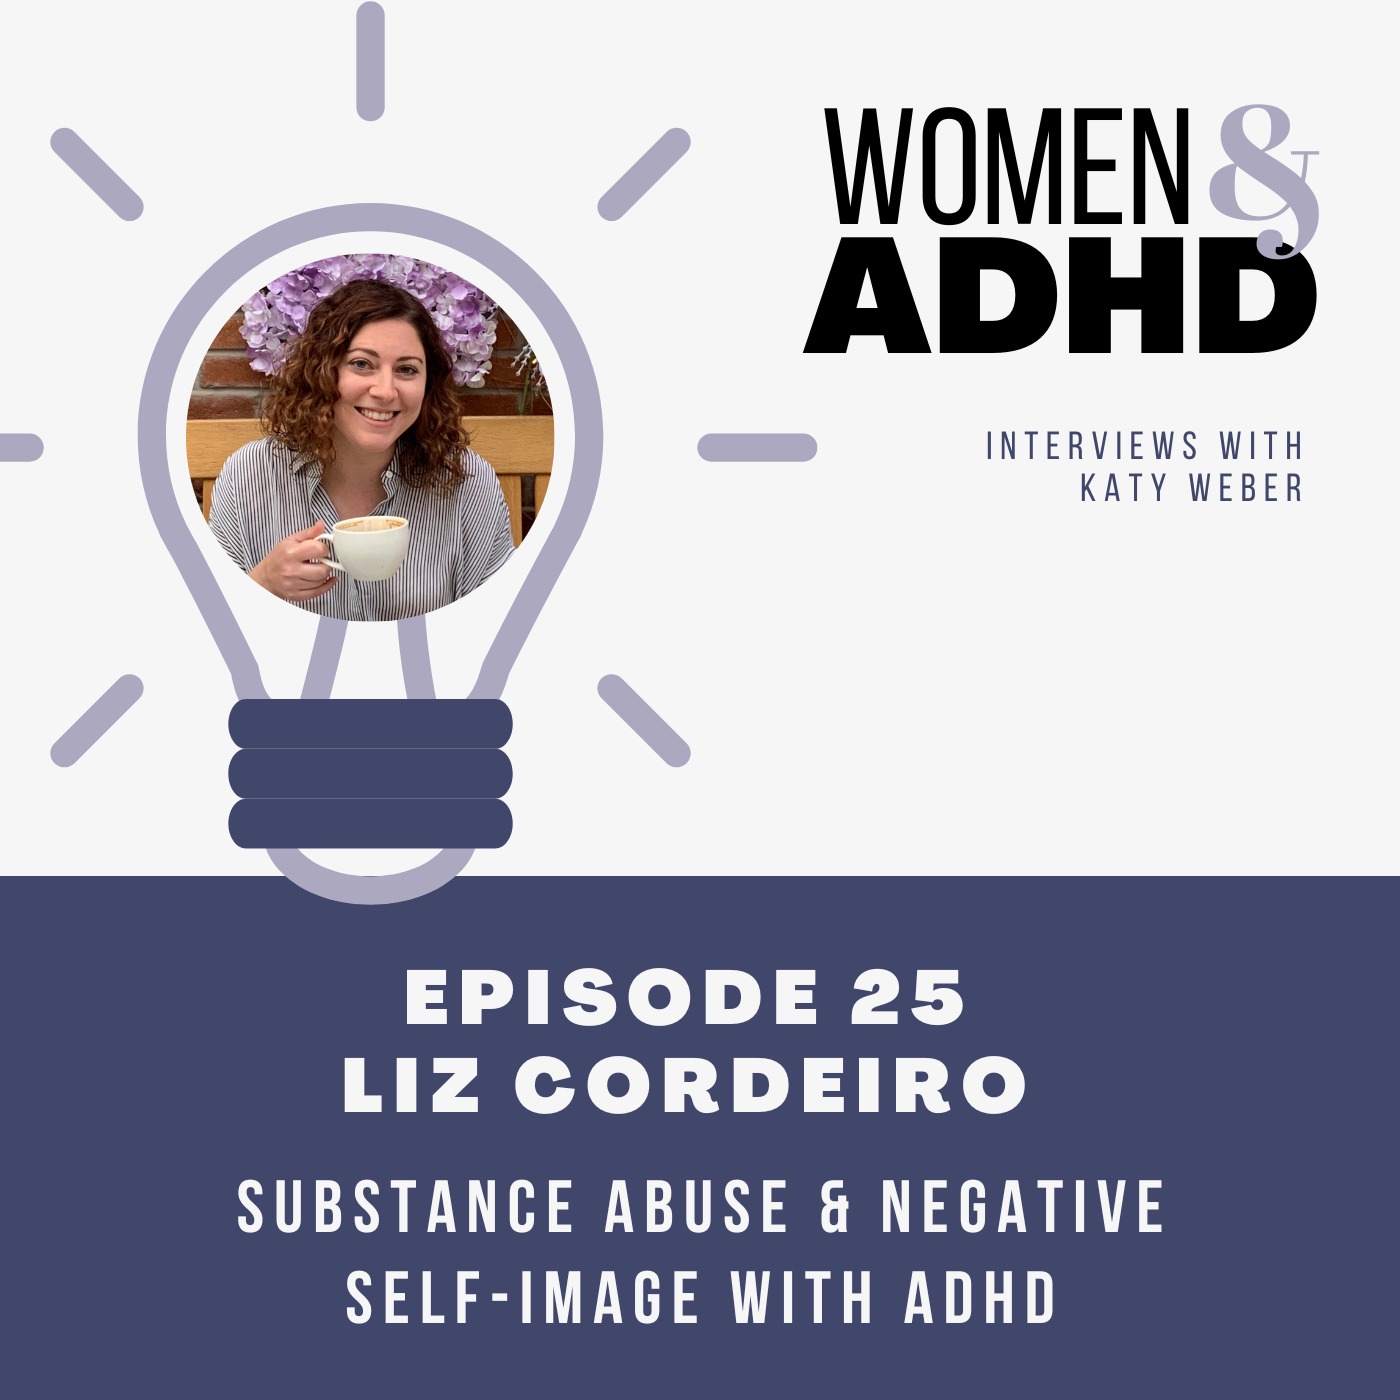 Liz Cordeiro: Substance abuse & negative self-image with ADHD